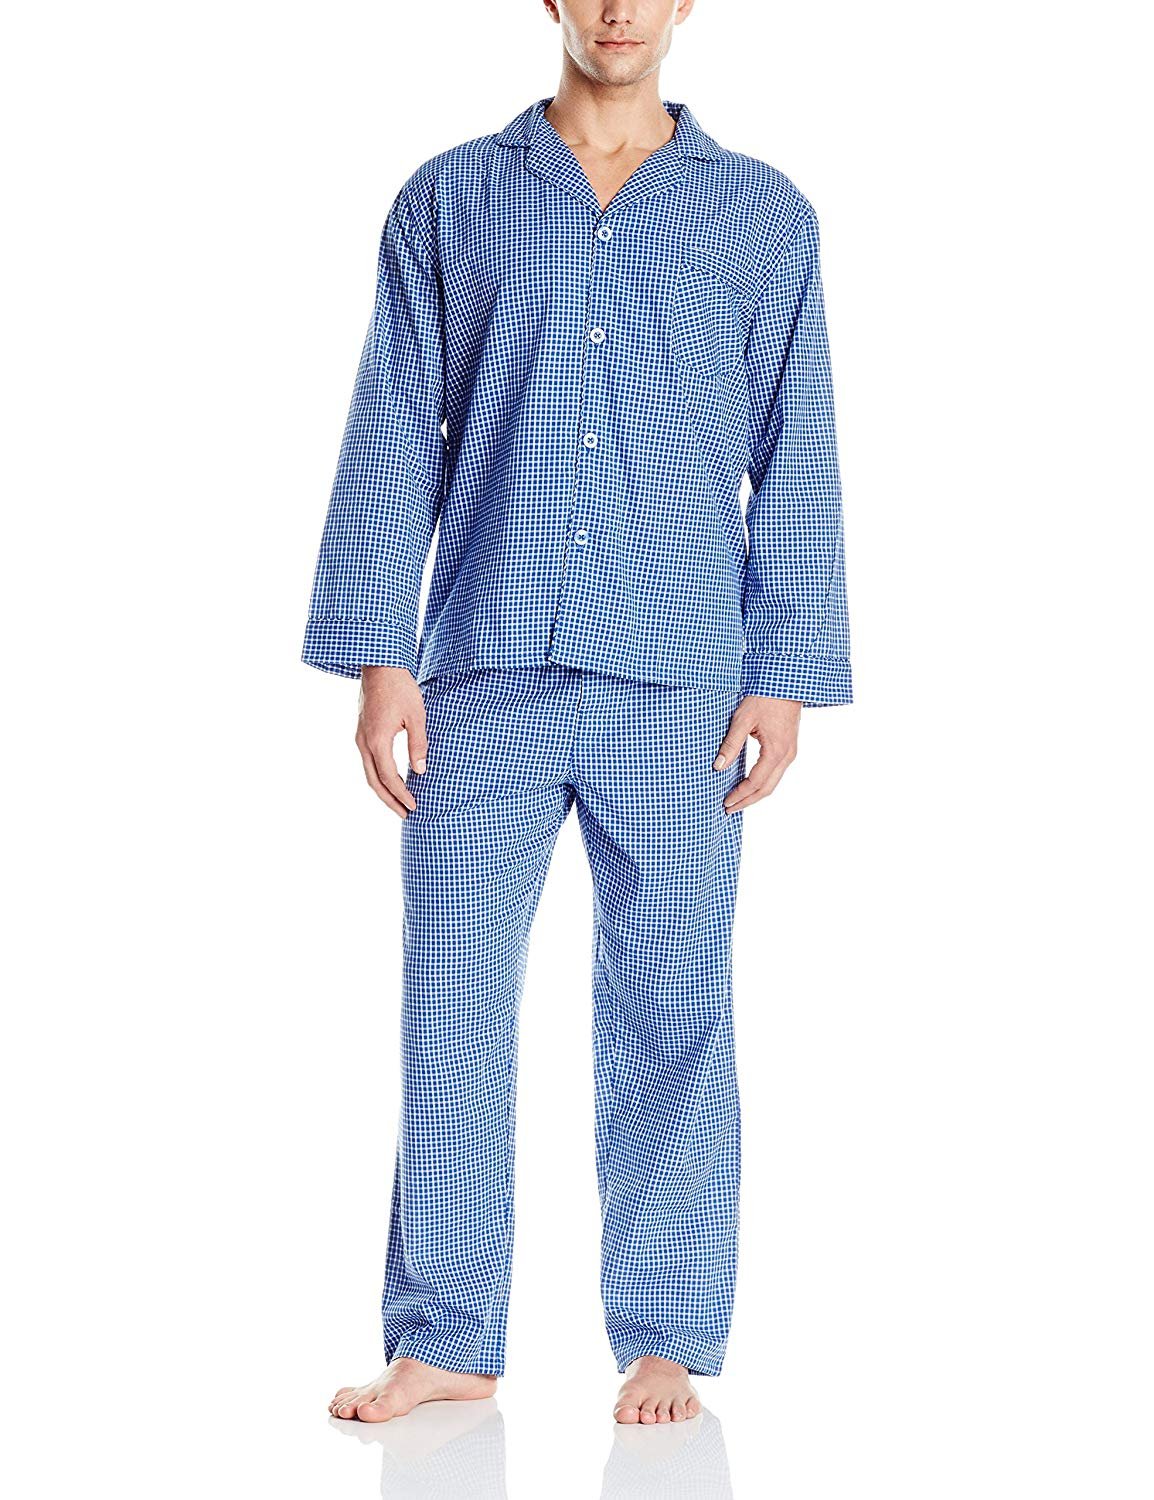 Hanes Men's Woven Plain-Weave Pajama Set | eBay